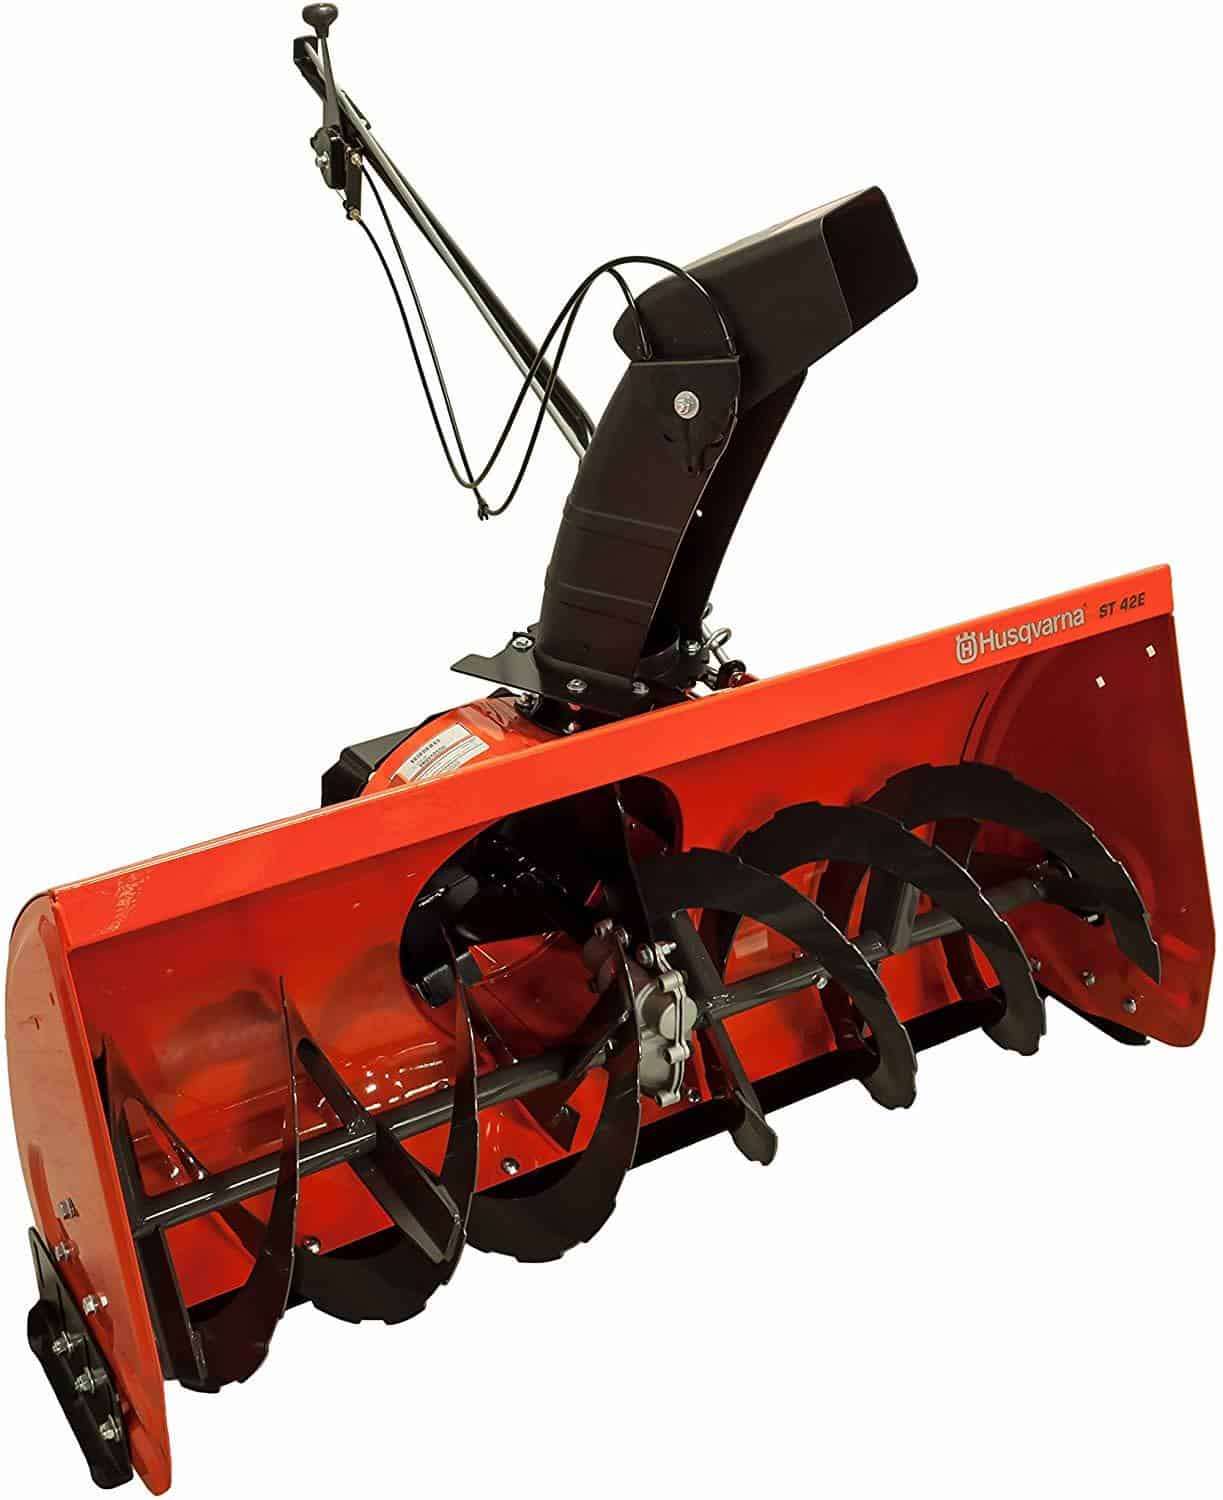 Husqvarna St42e Snow Thrower Attachment - Best Tractor Snow Blower Combination